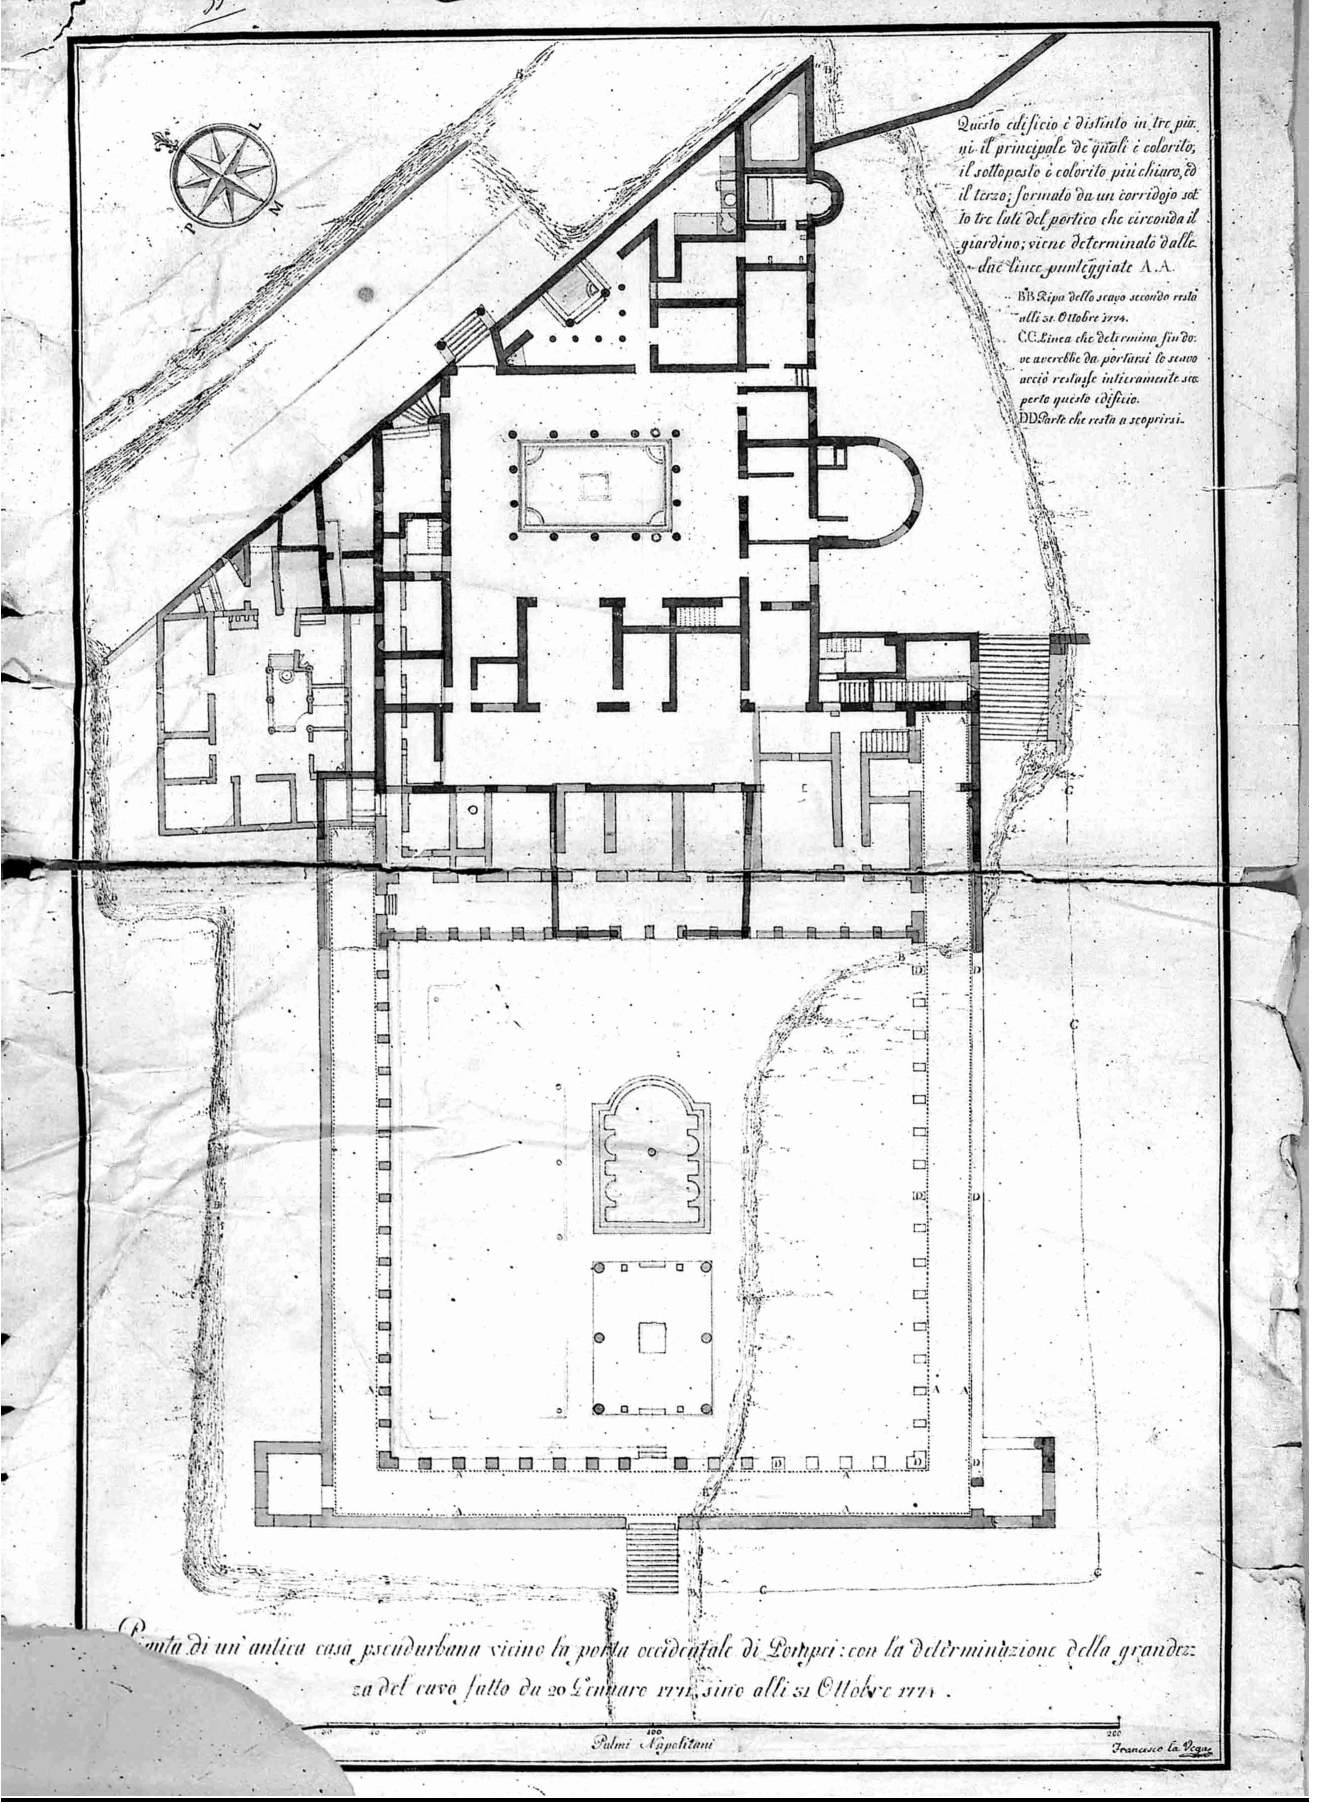 Villa of Diomedes. Plan of all three levels excavated from 20th January 1771 to 31st October 1774 by F. la Vega.

Now in Naples, Archivio di Stato, Raccolta pianta e disegni, XXIV, 5.